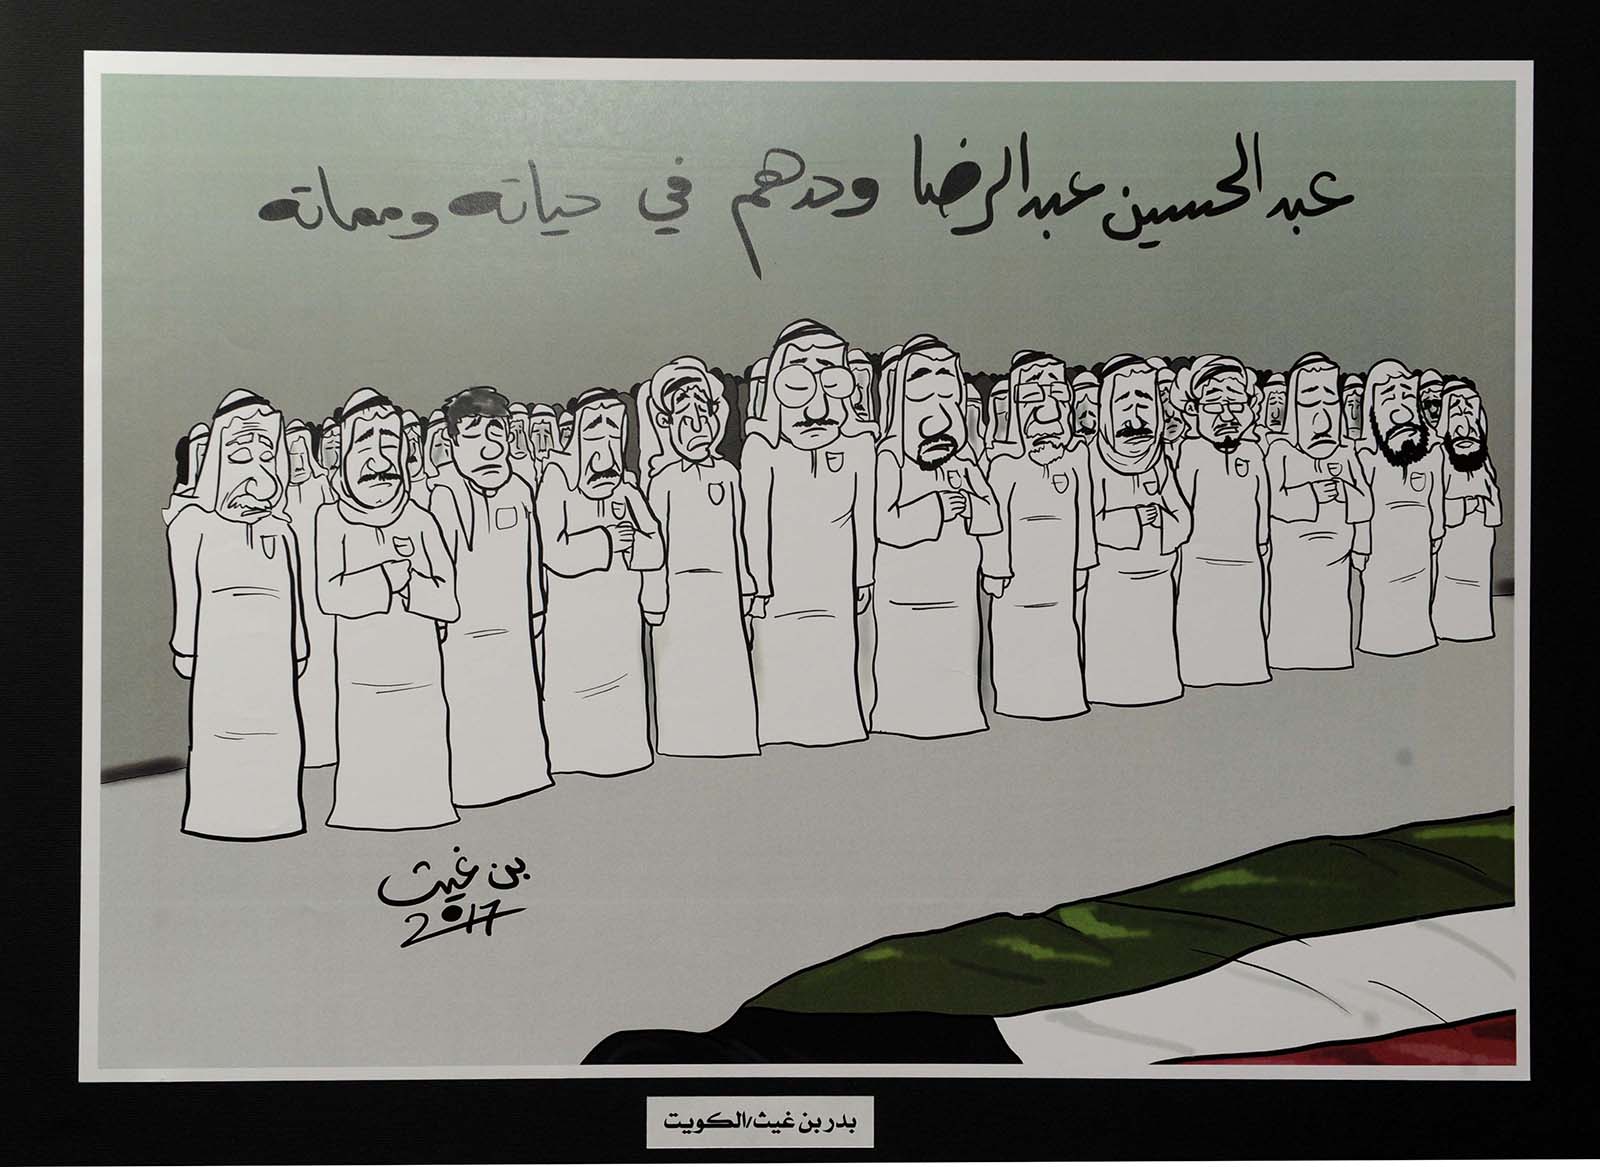 Caricature gallery in memory of Abdulredha